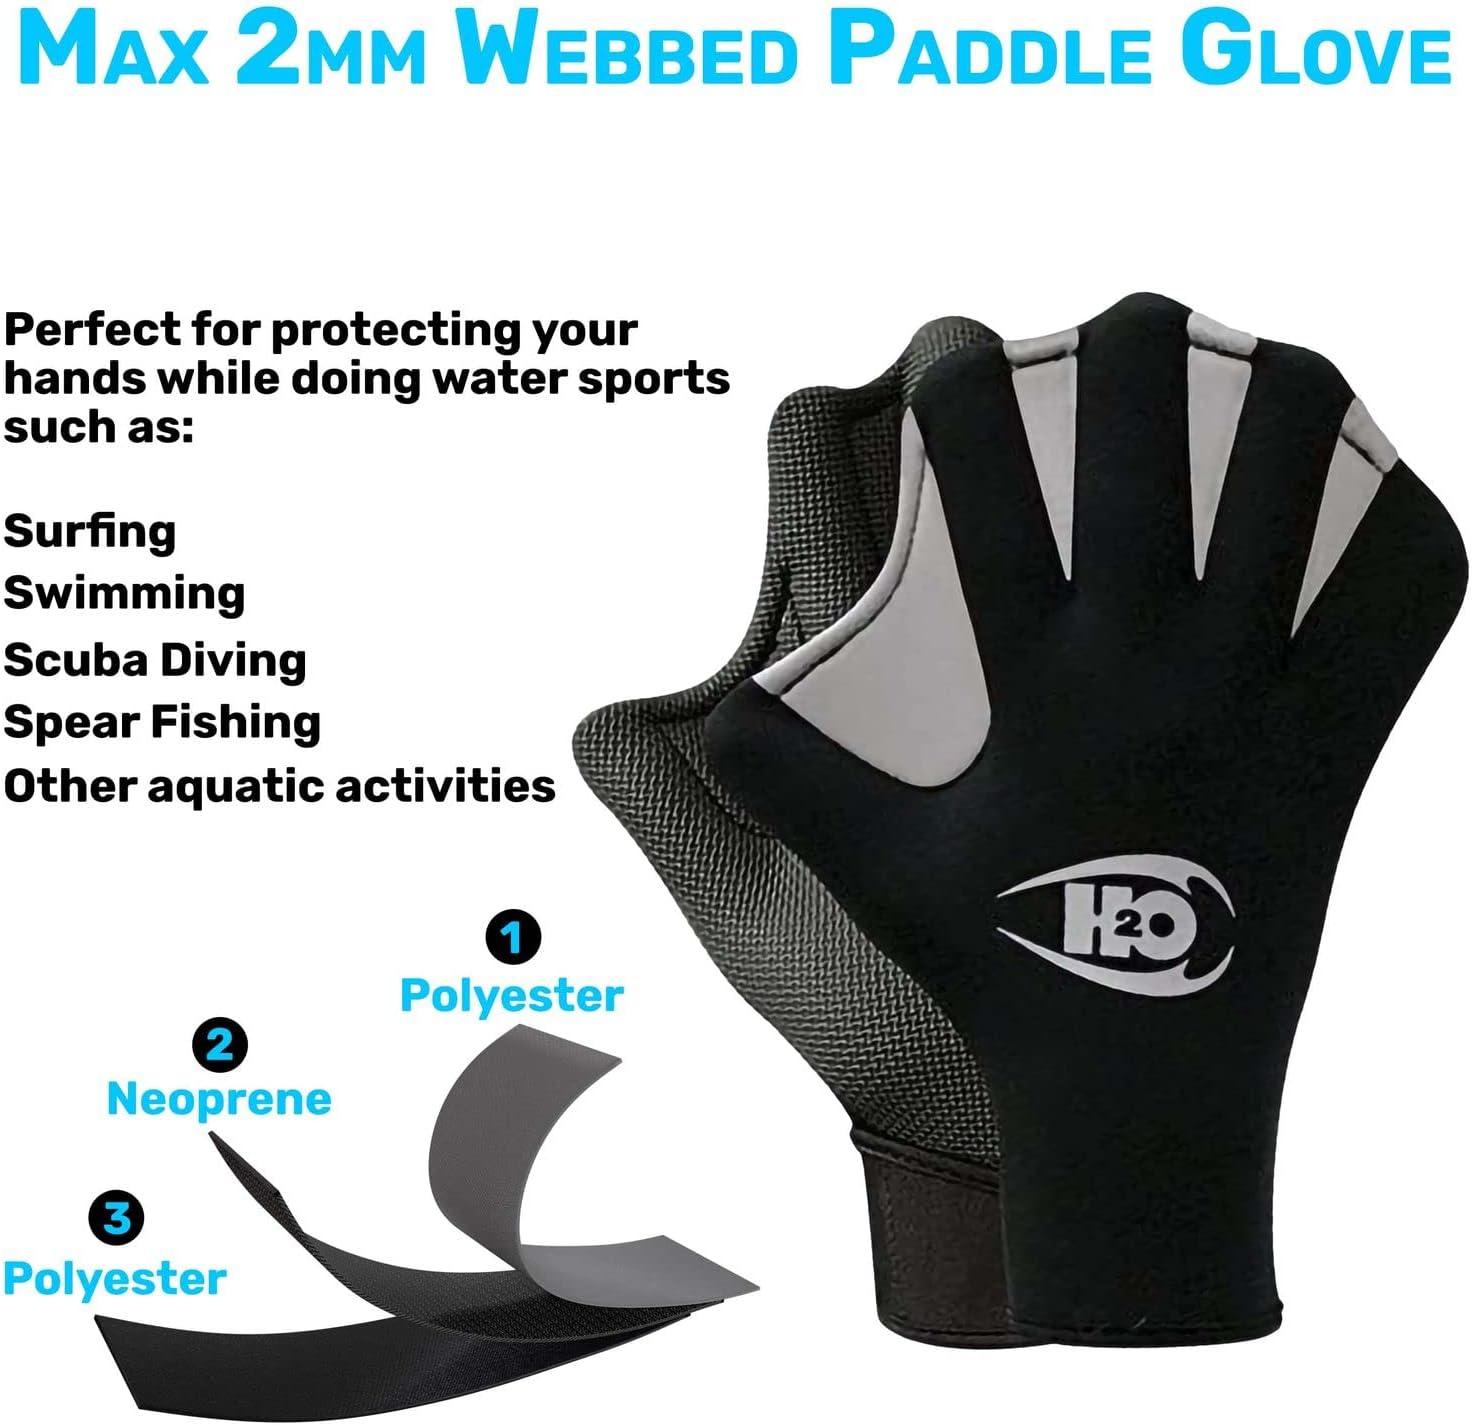 H2ODYSSEY Paddle Gloves - Webbed Gloves with Velcro Strap